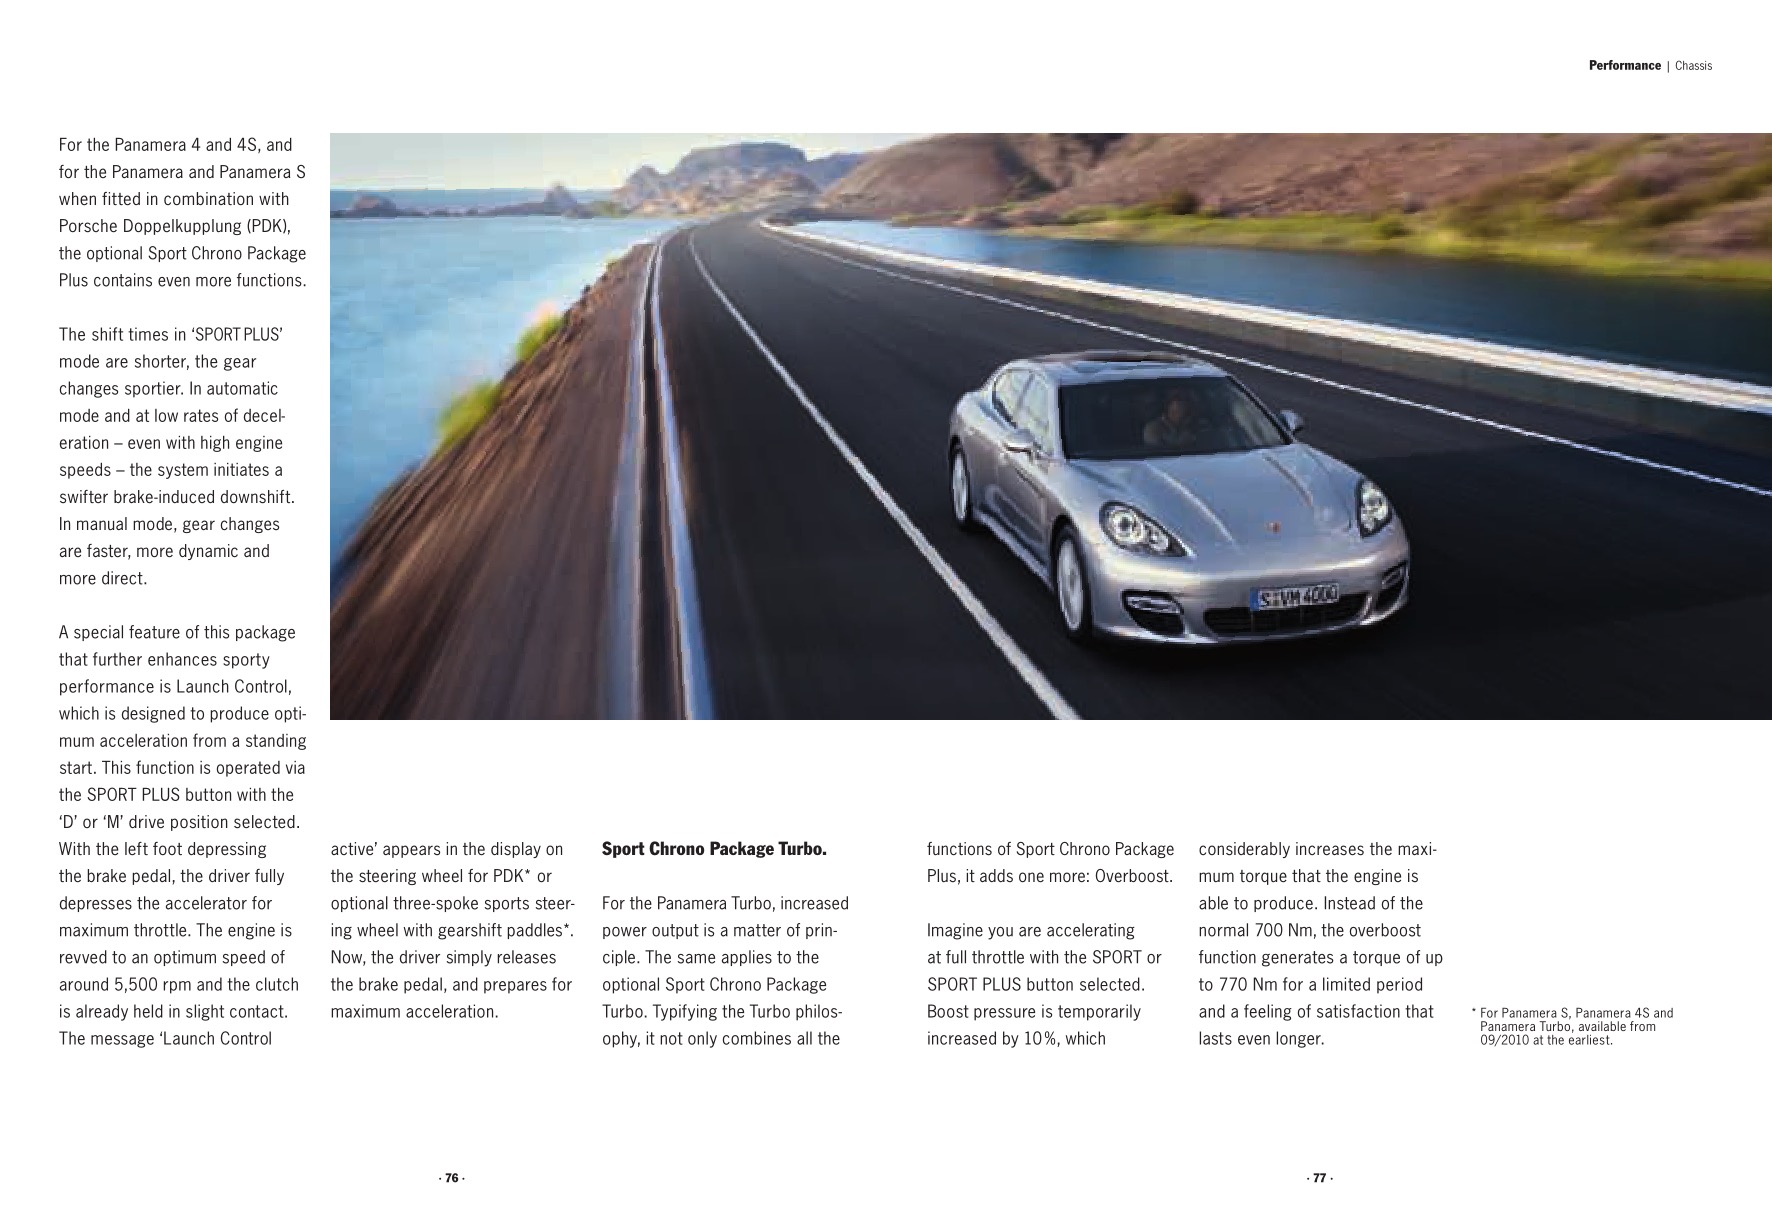 2010 Porsche Panamera Brochure Page 77